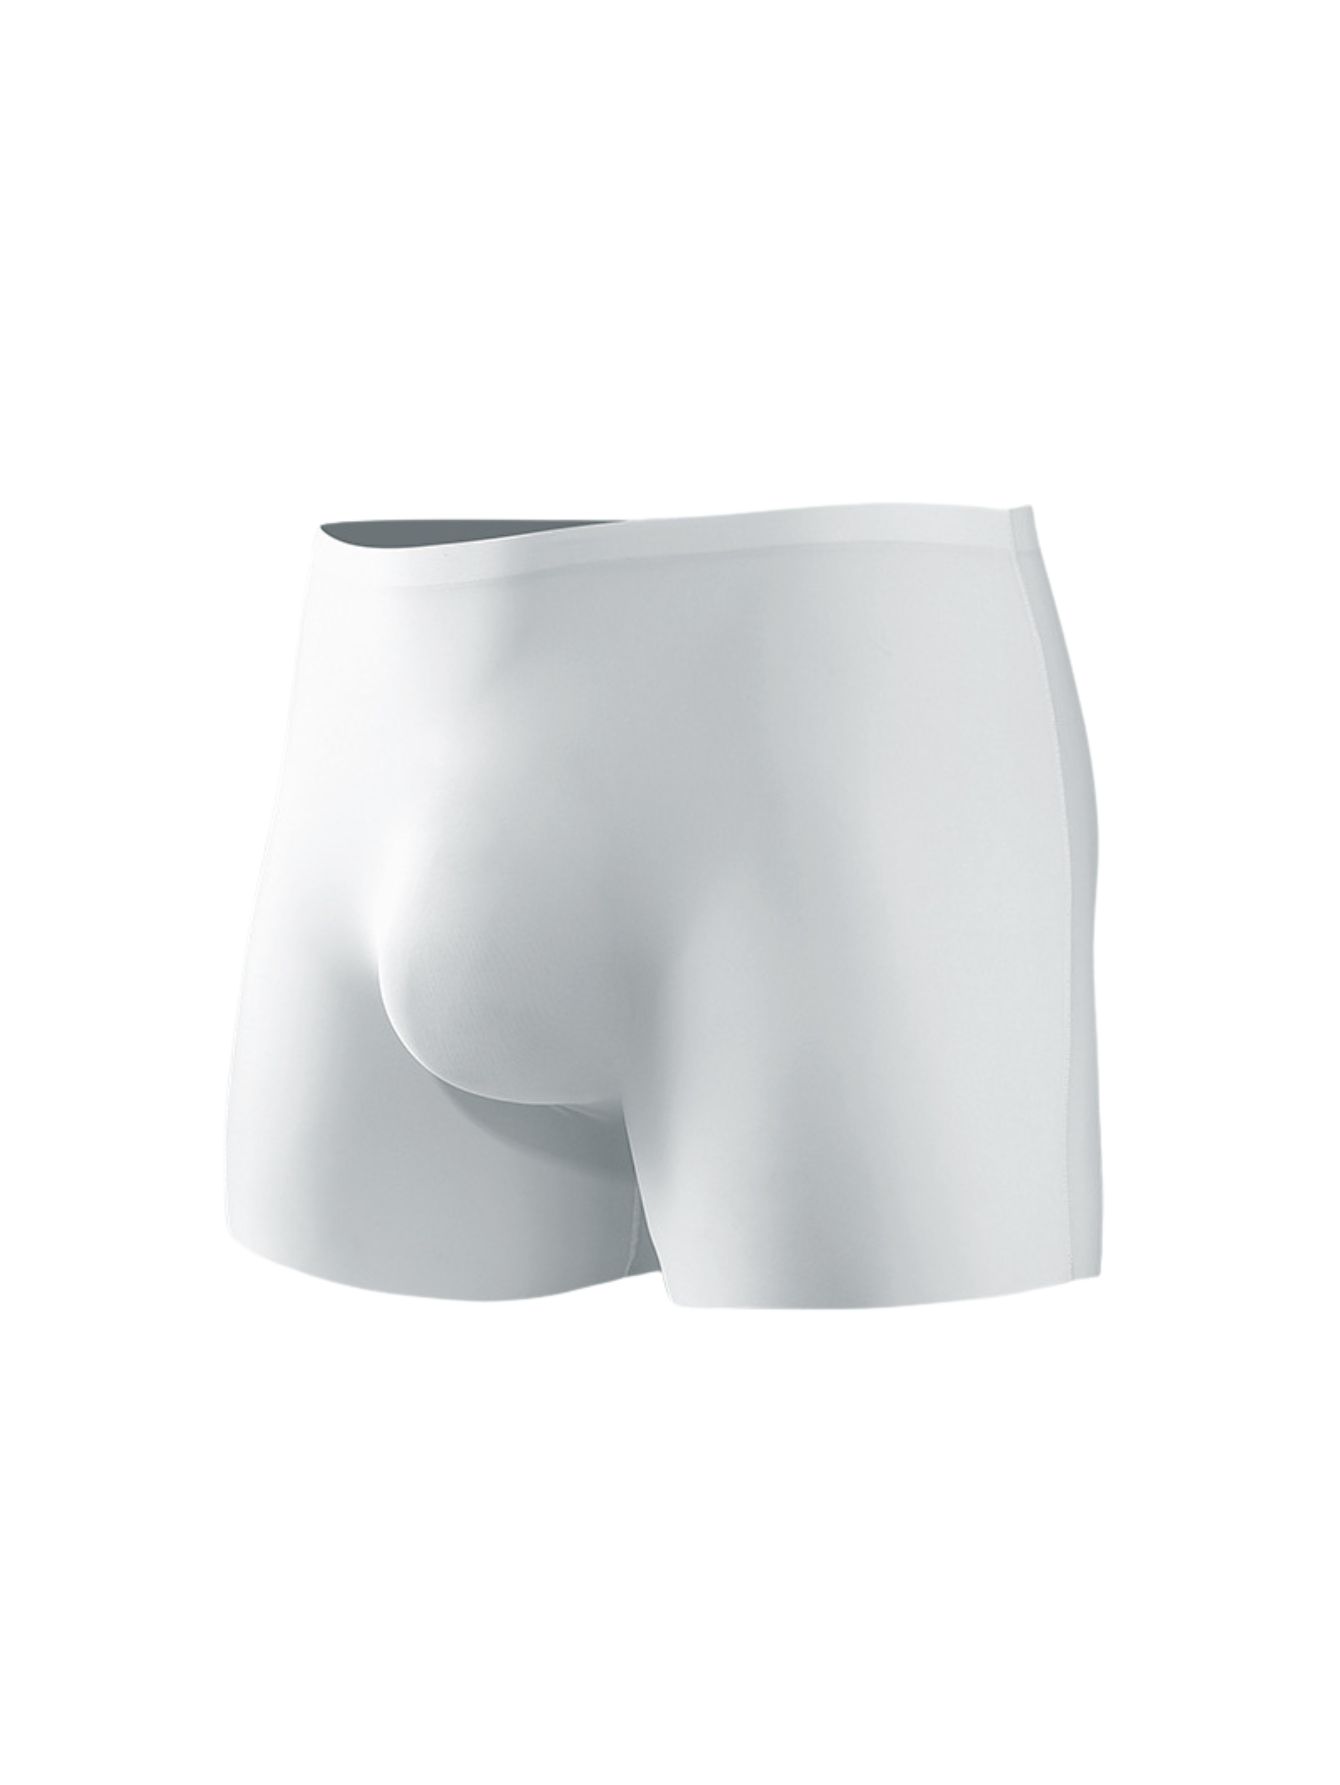 COODYAKE Men's Seamless Microfiber Modal Boxer Briefs Underwear Short Leg 3  Pack,White,Small at  Men's Clothing store